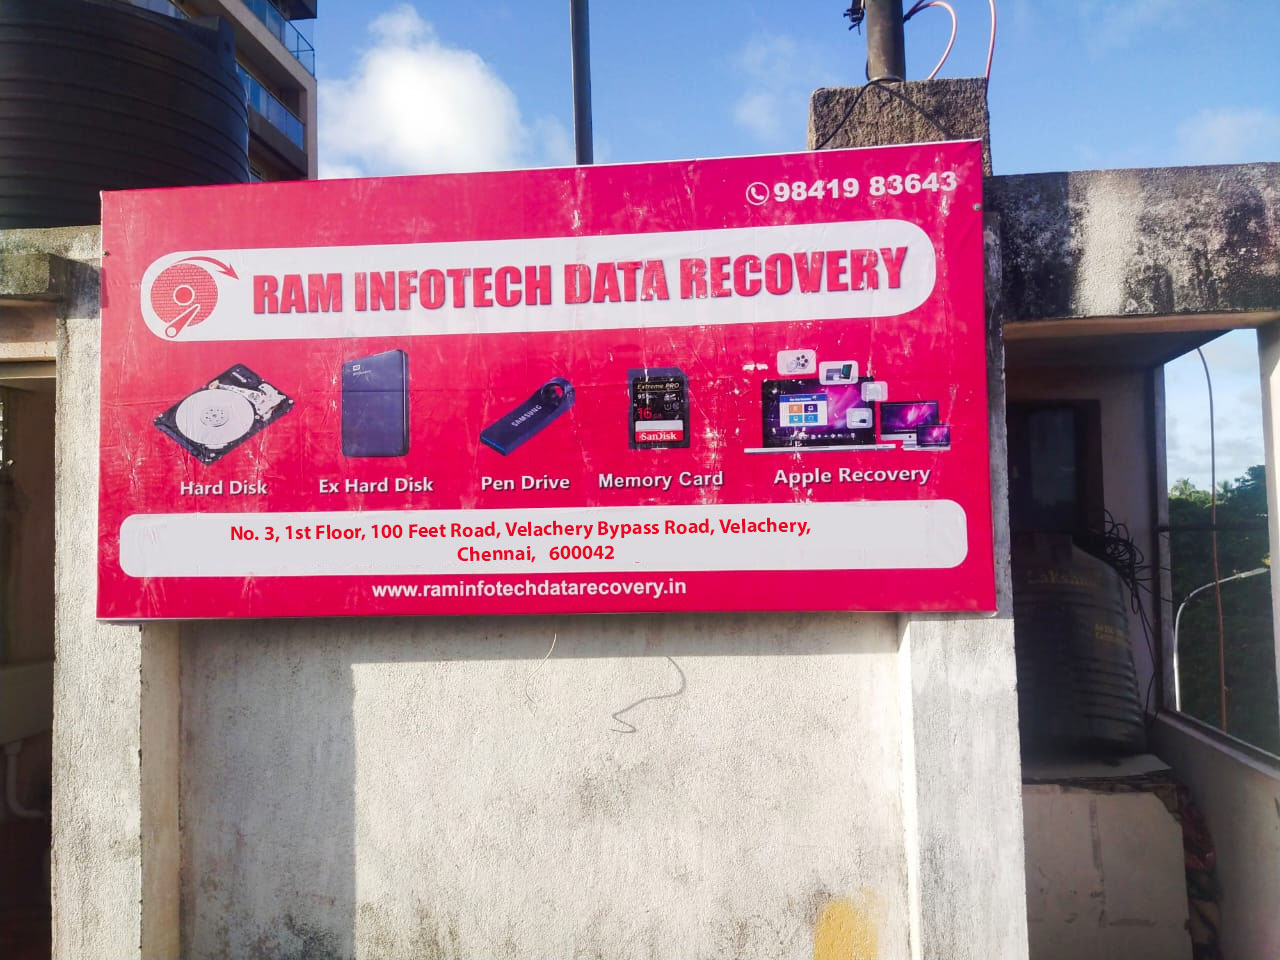 Raminfotech Data Recovery in velachery in Chennai